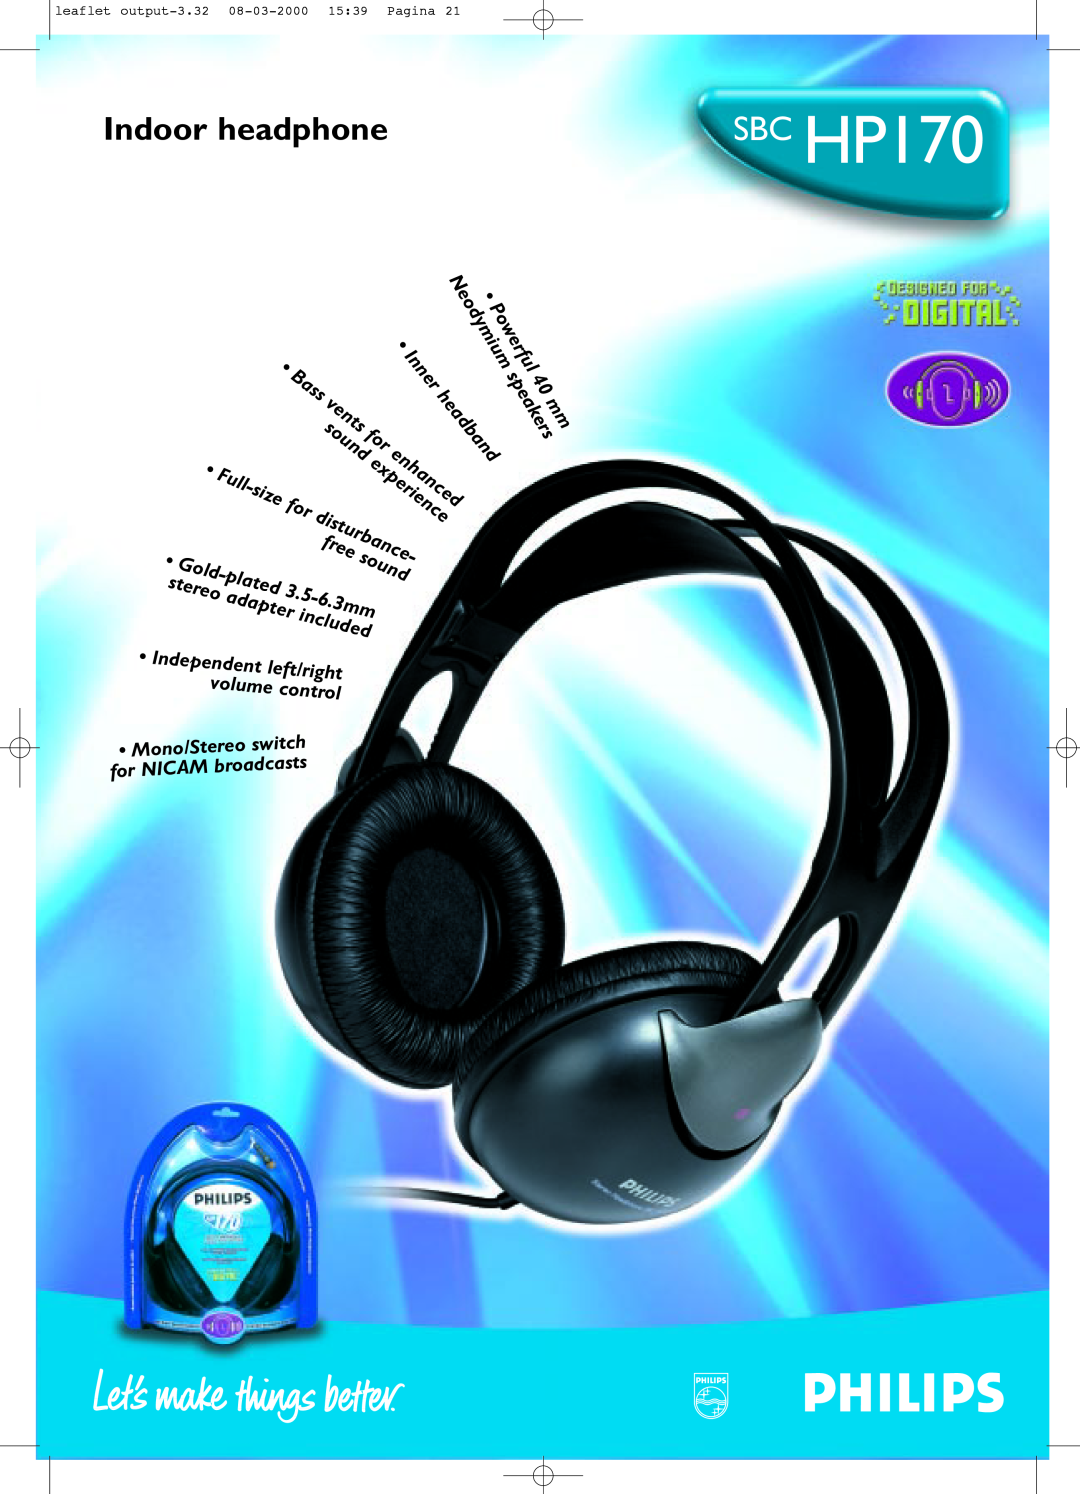 Philips SBCH P170 manual SBC HP170, Indoor headphone, Inner, Full, sound, vents, speakers, headband, Neodymium, 5-6.3mm 